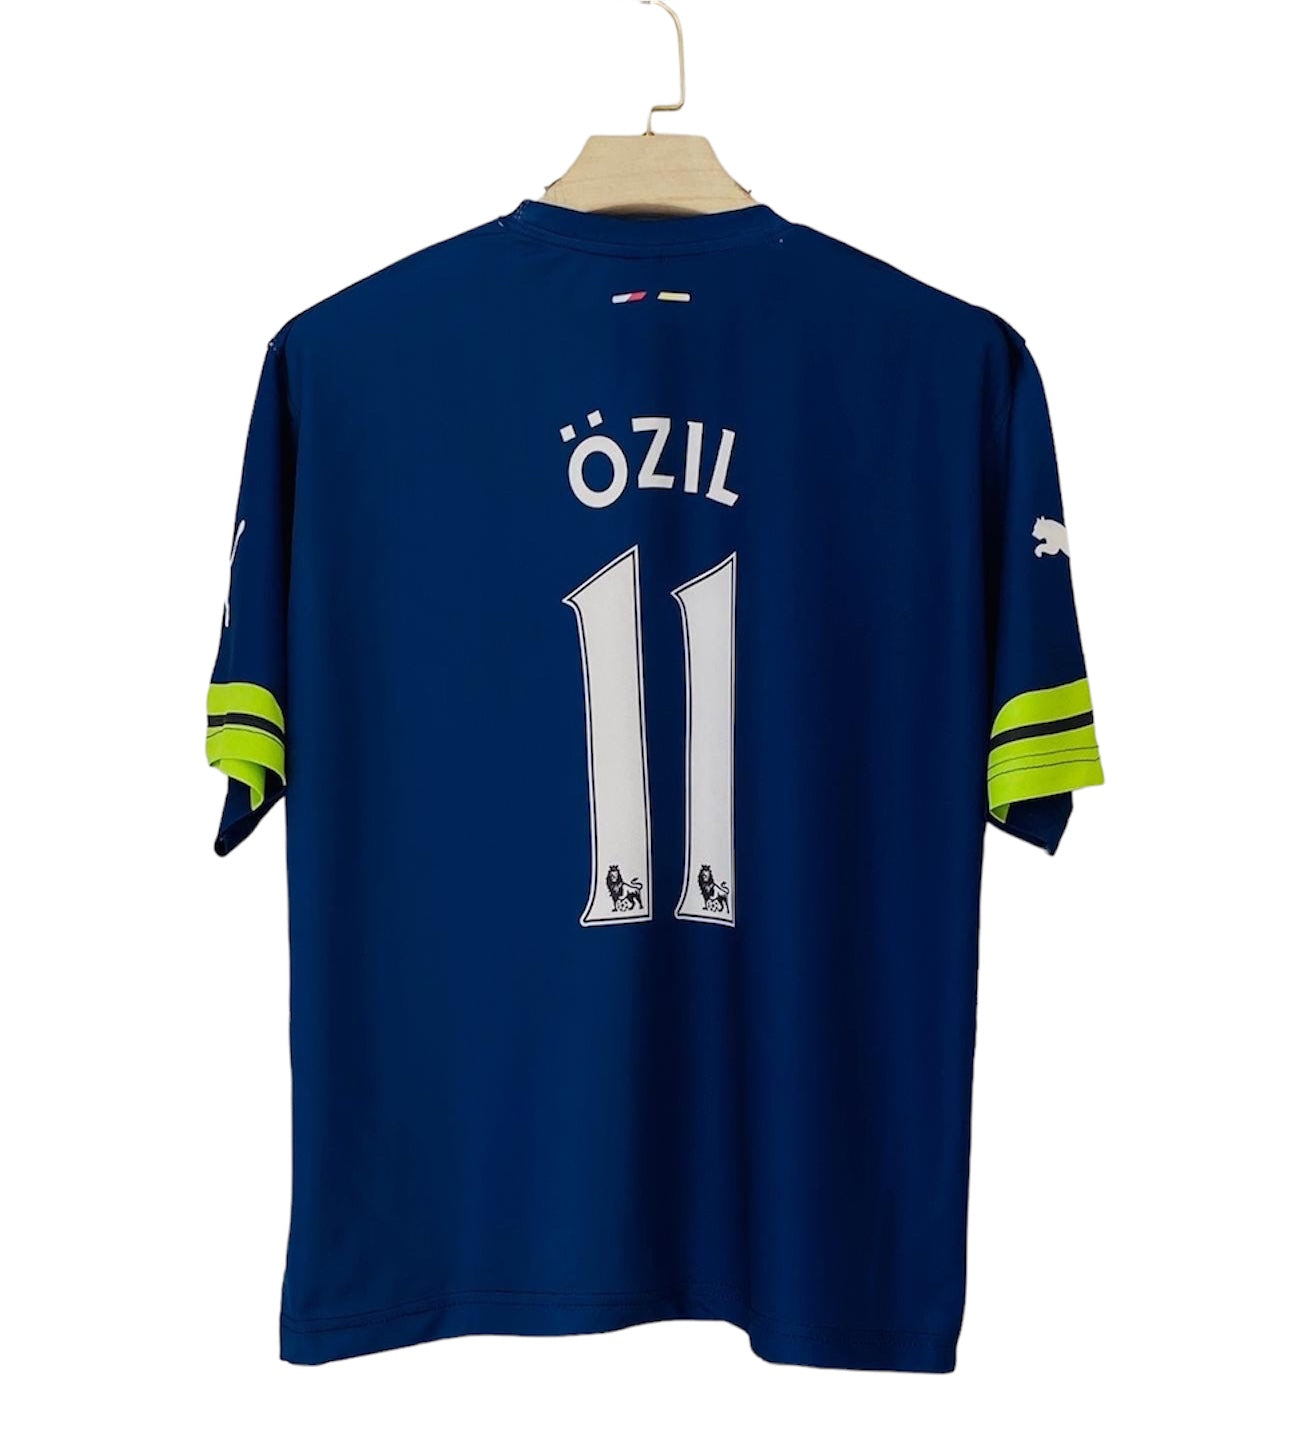 Ozil five sleeve arsenal